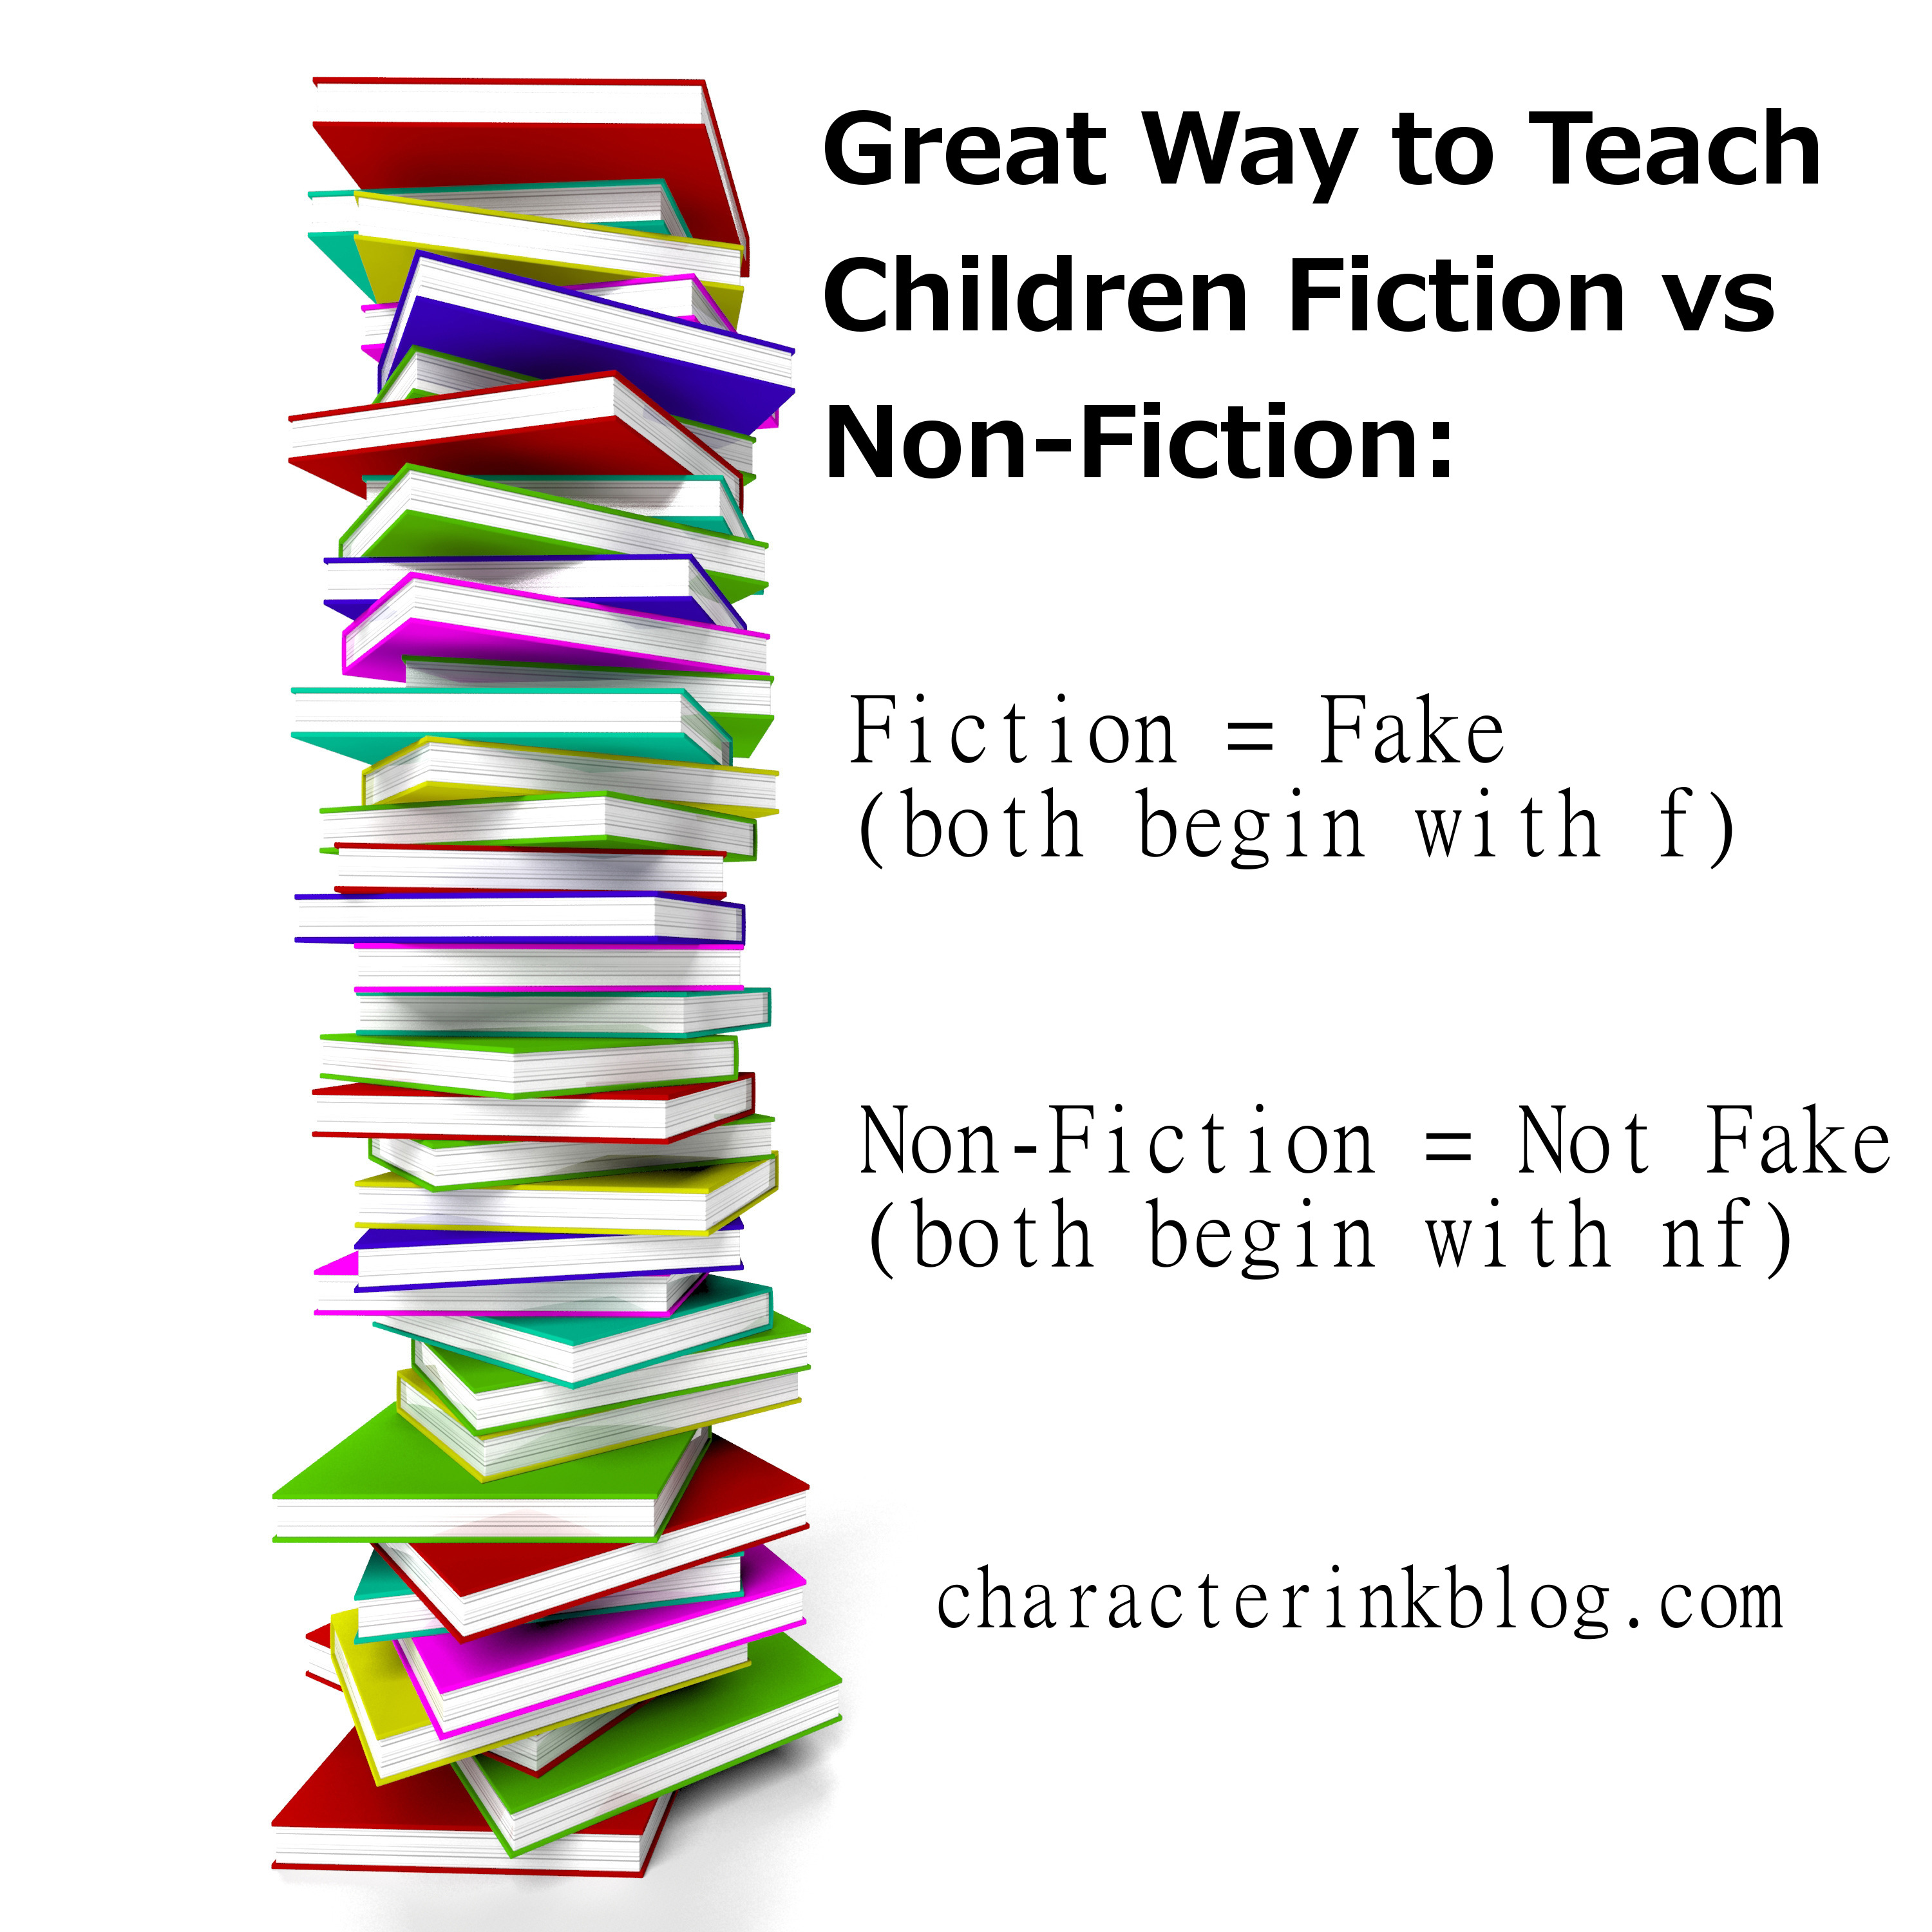 Fiction vs. Non-Fiction